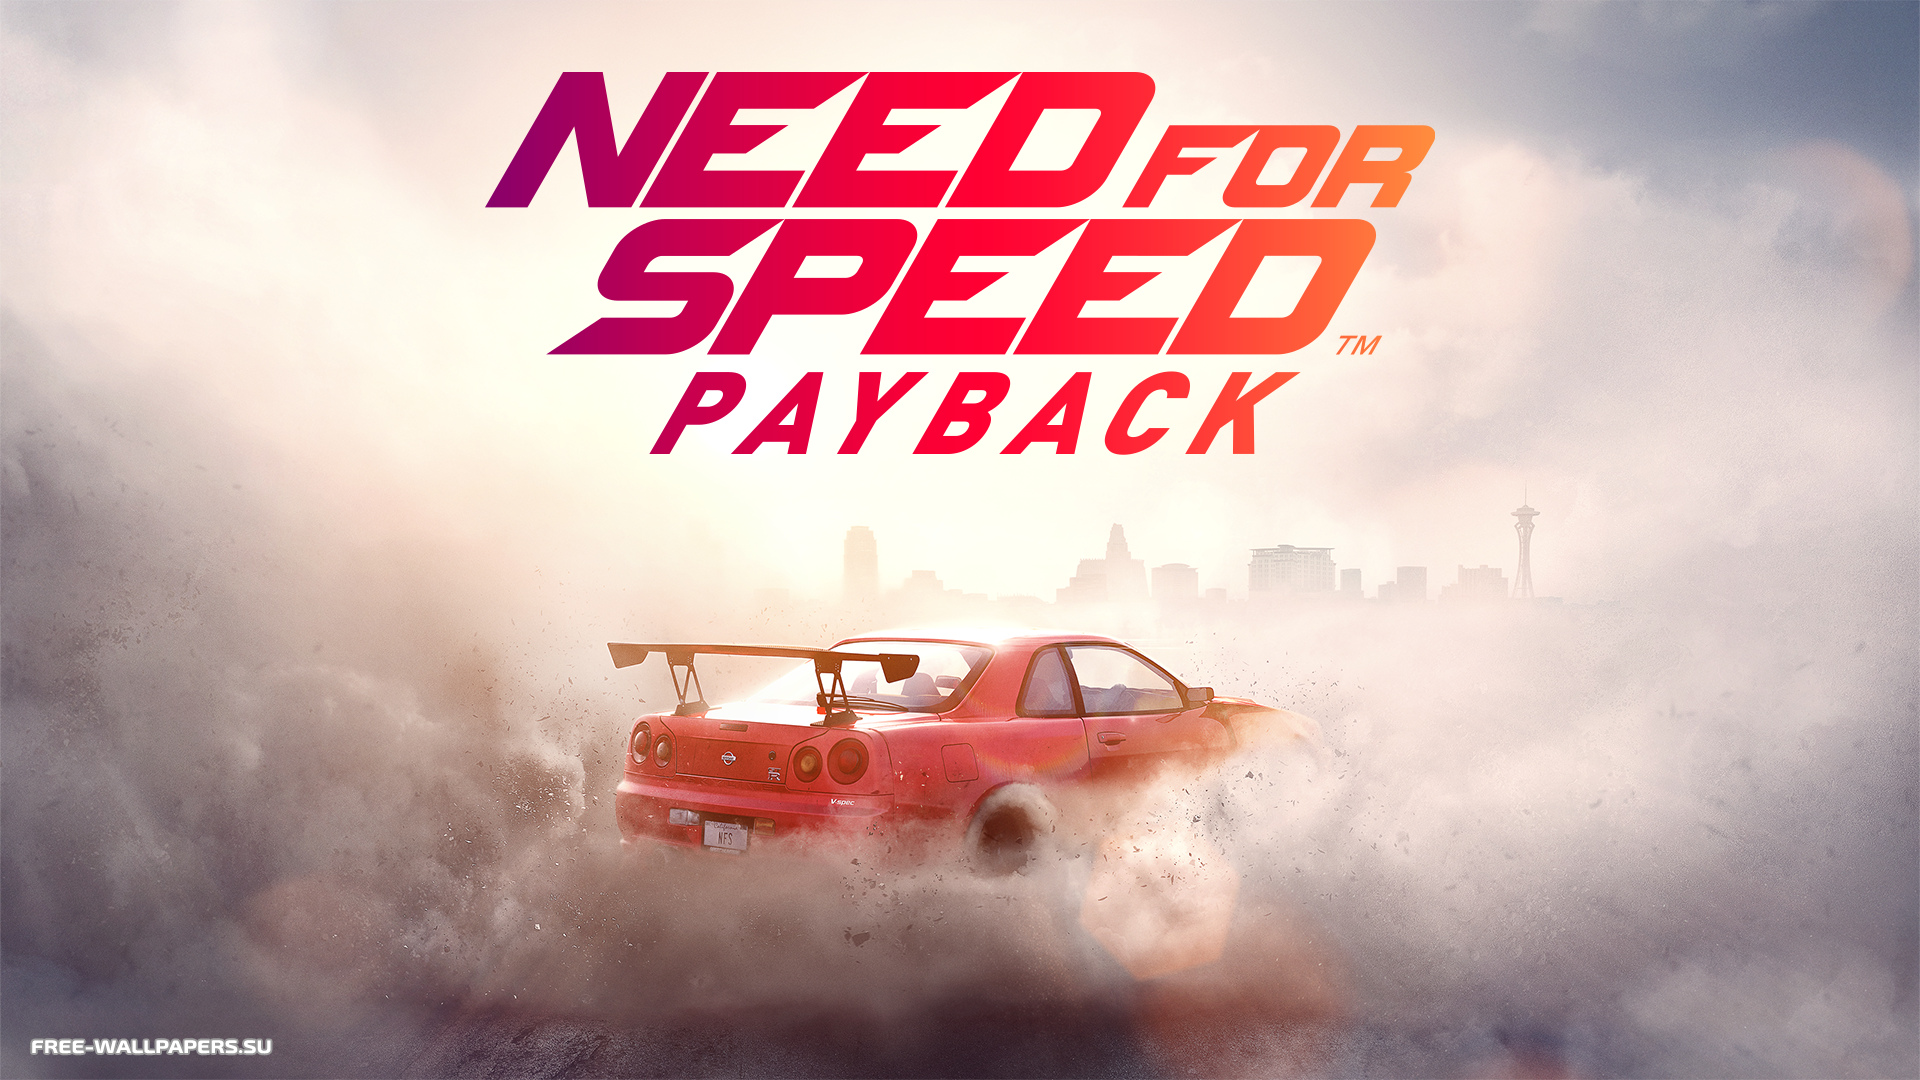 Need for speed playback. Игра need for Speed Payback. Need for Speed Payback гонки. Need for Speed пейбек. Картинки need for Speed Payback.